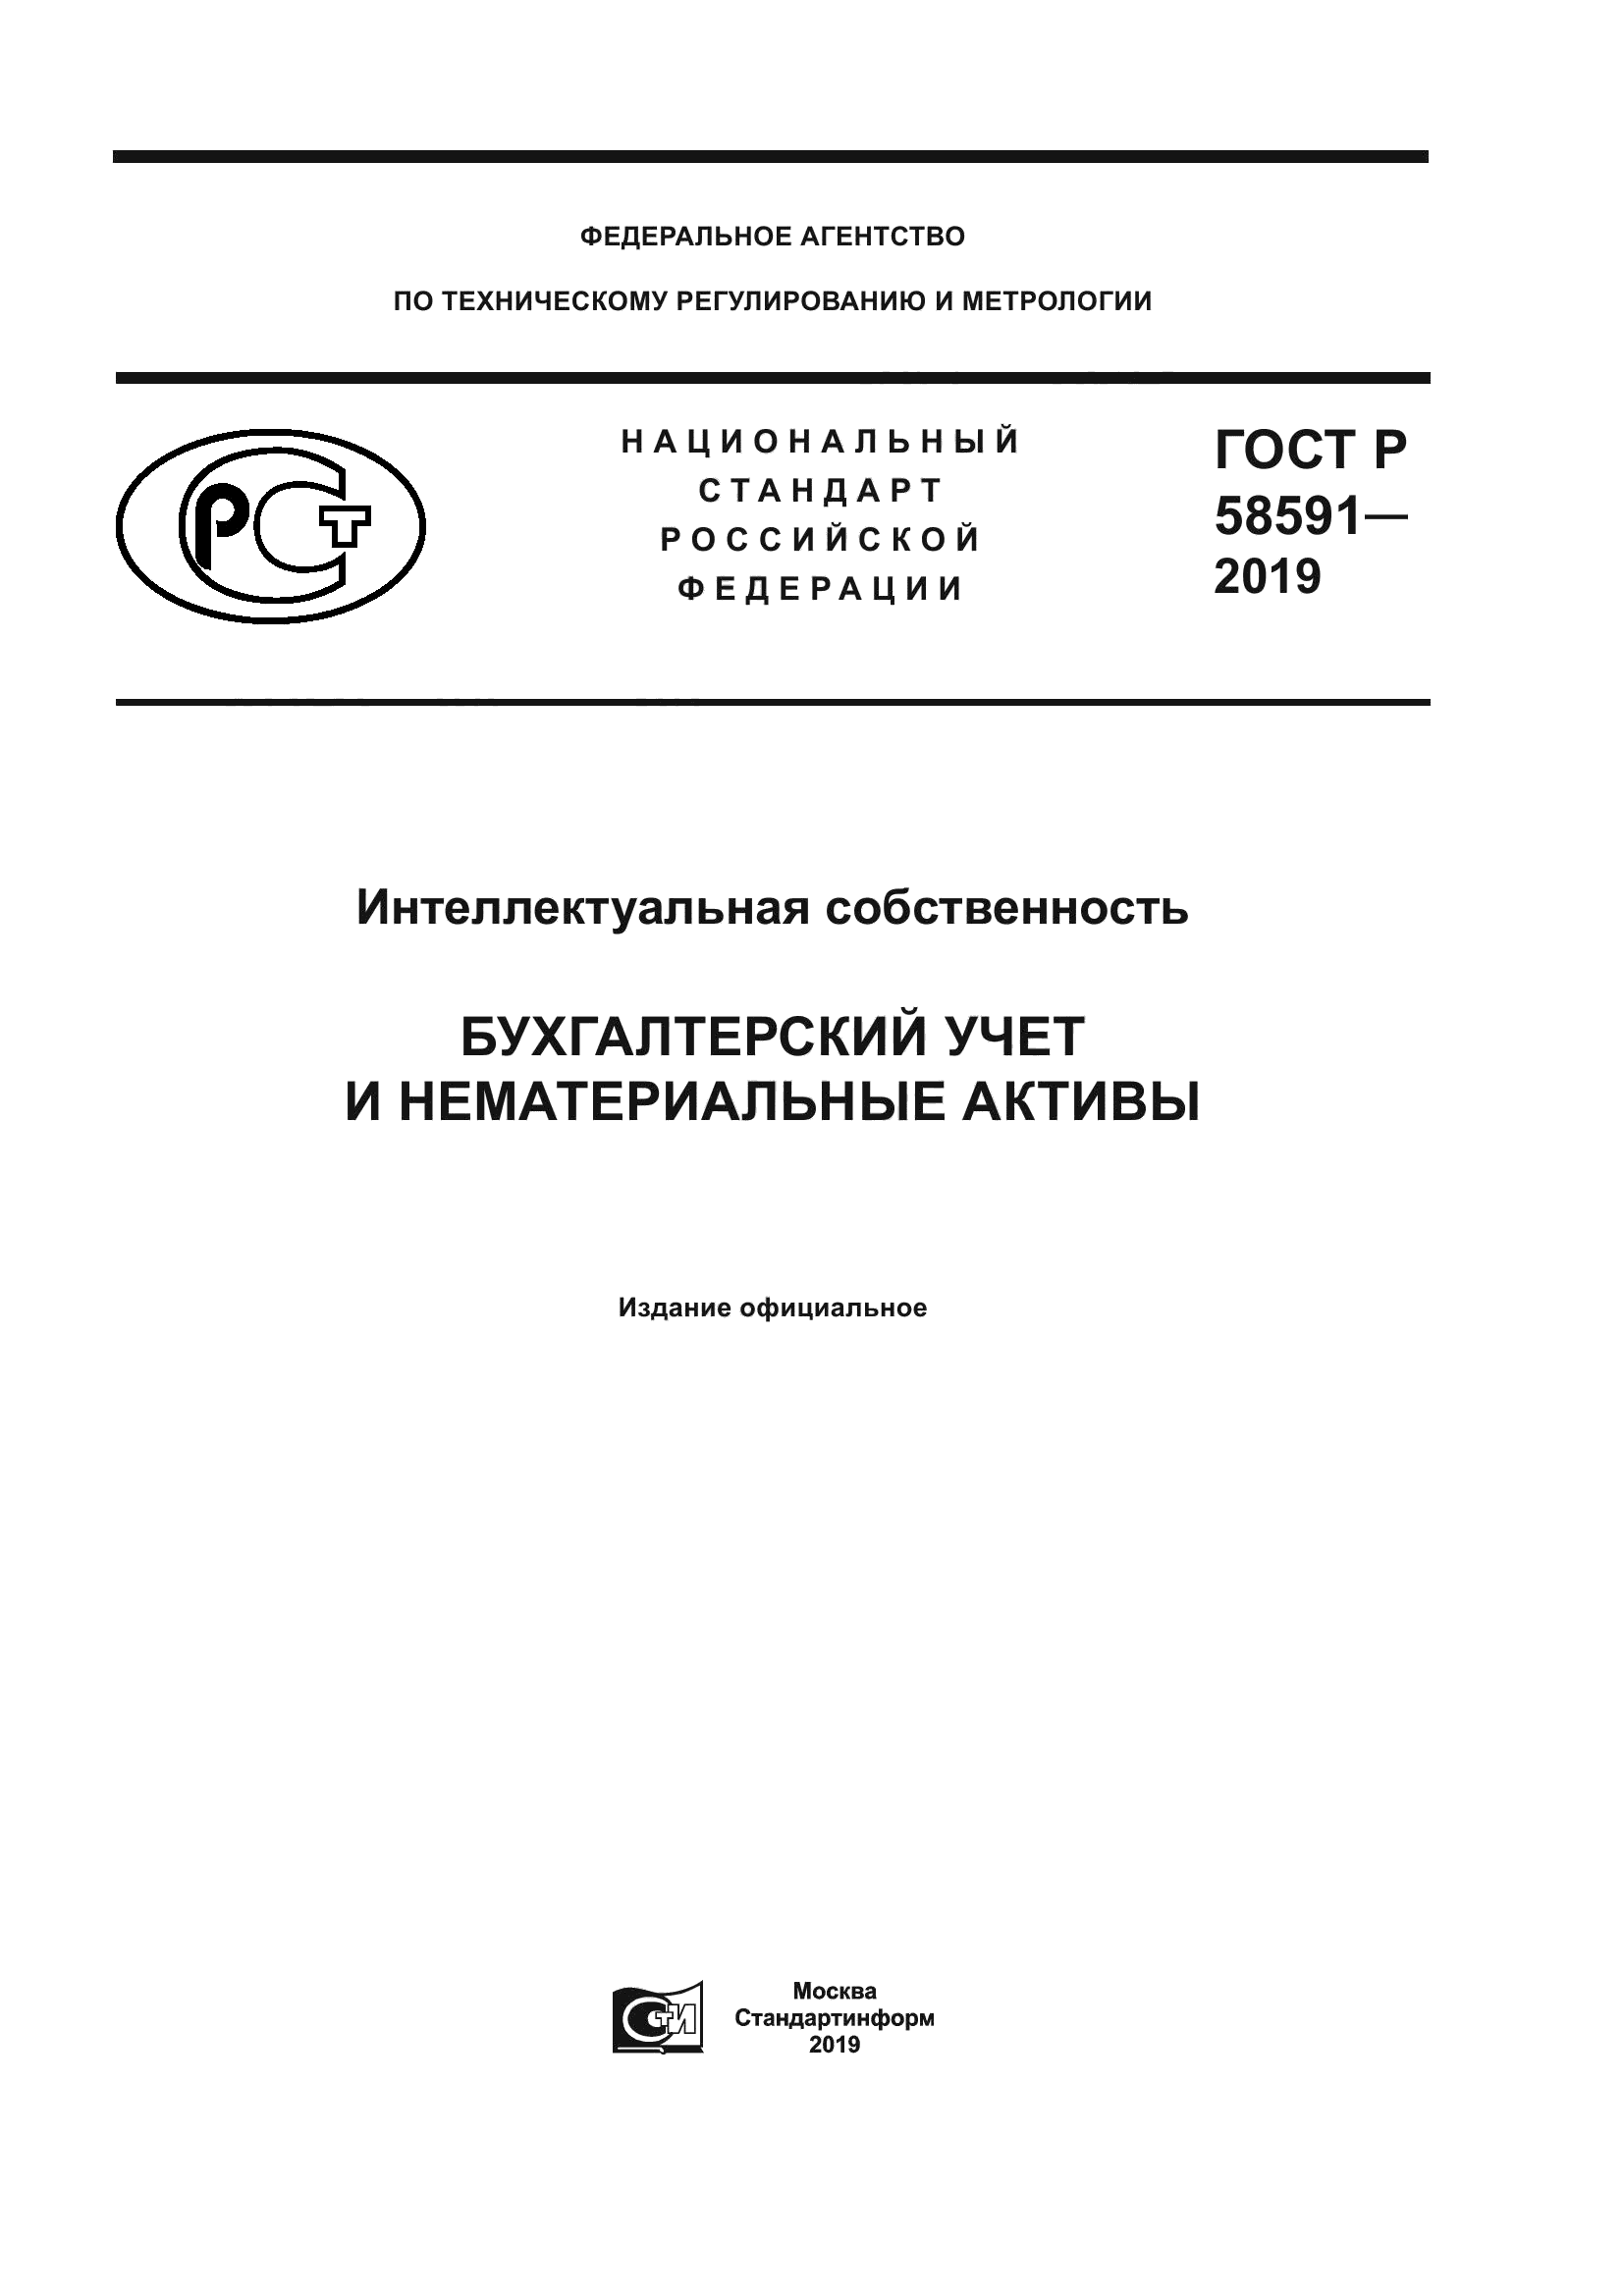 ГОСТ Р 58591-2019